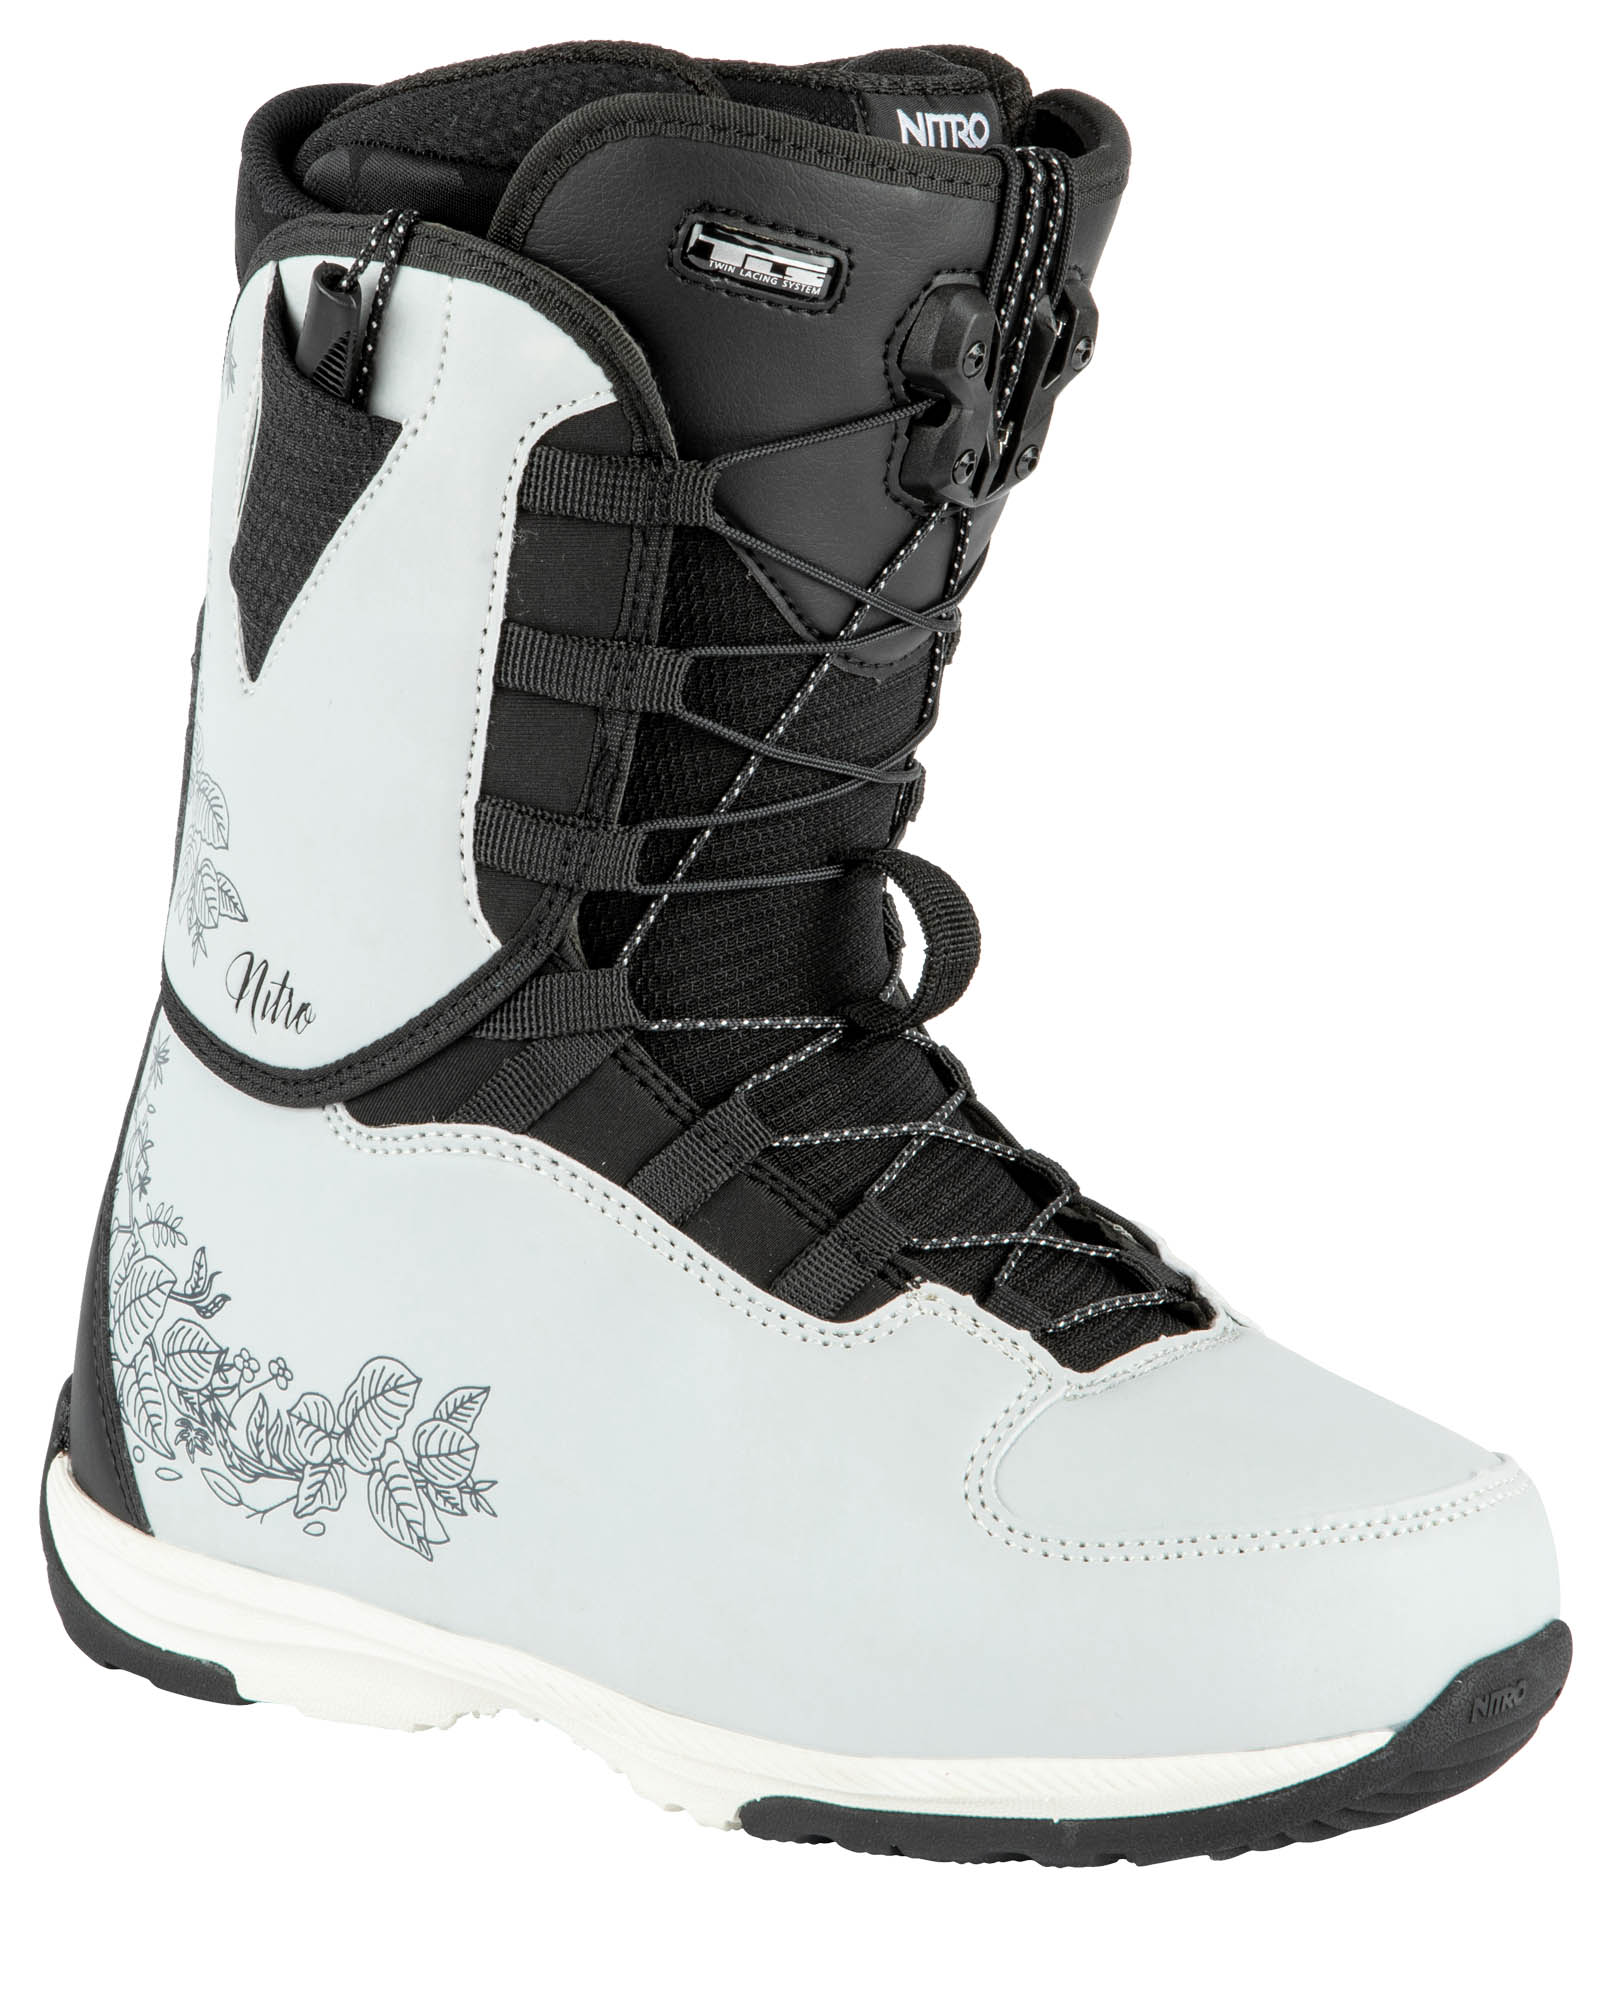 Nitro 21/22 Snowboard Boots